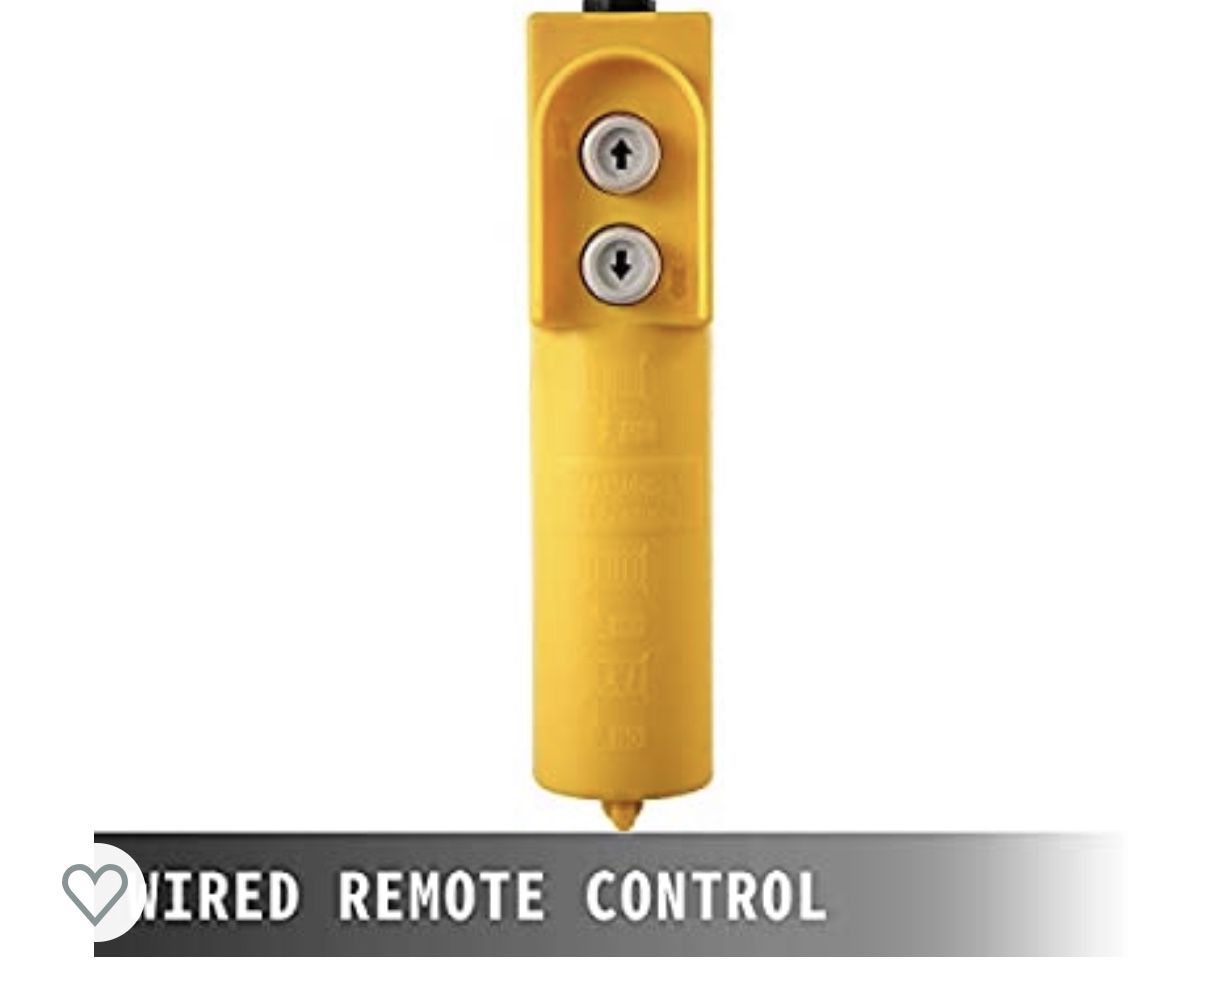 Wired remote control